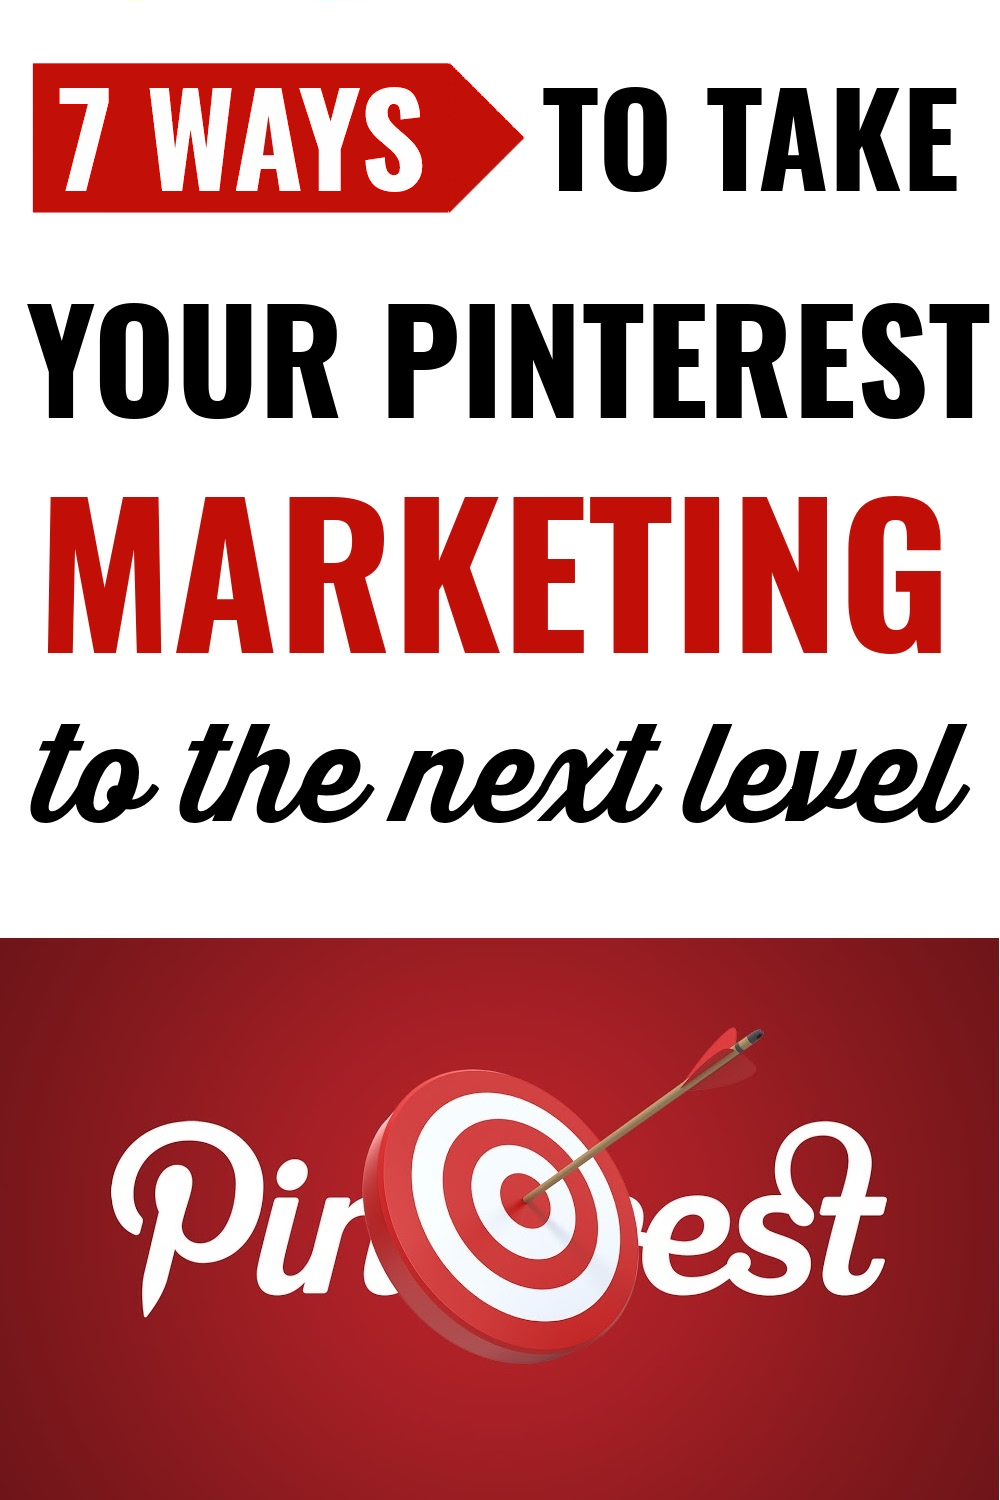 7 Ways to Take Your Pinterest Marketing to the Next Level